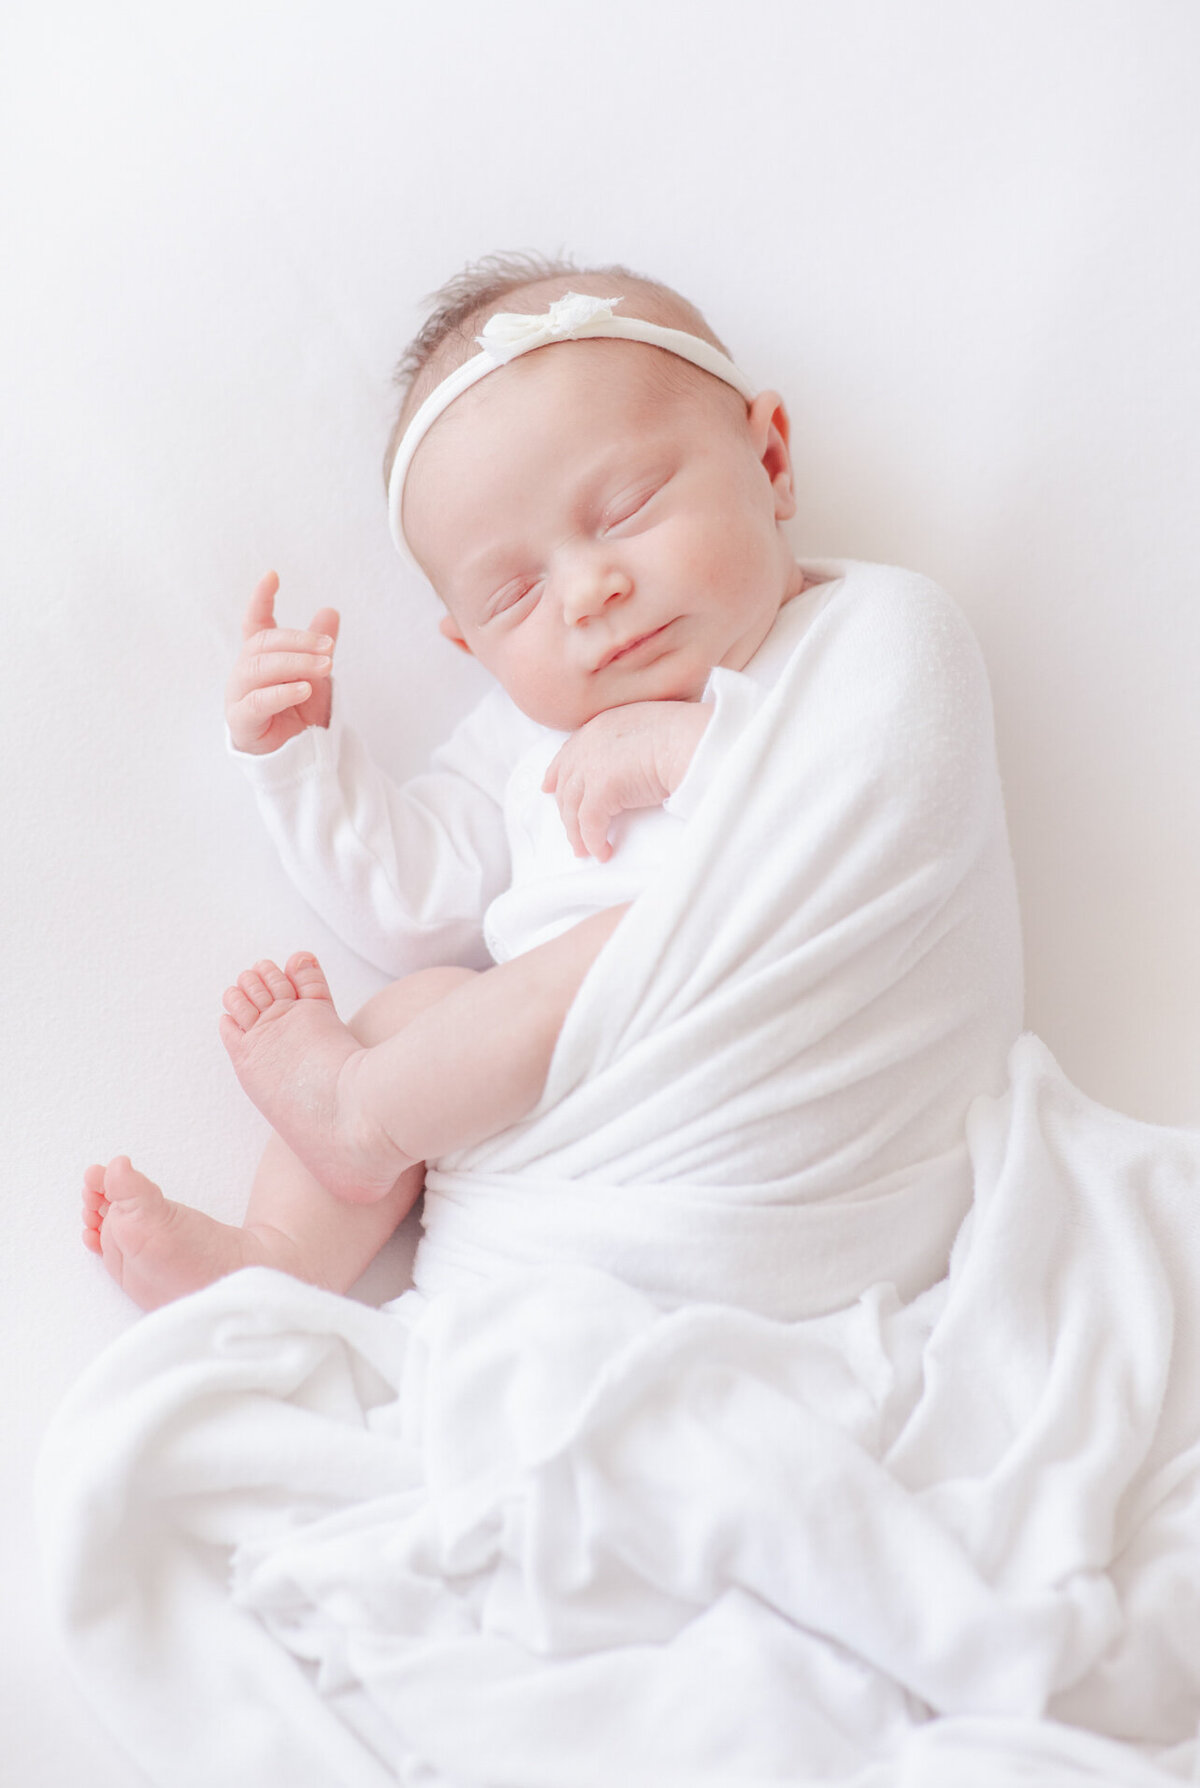 boston newborn photographer - molly katherine photography